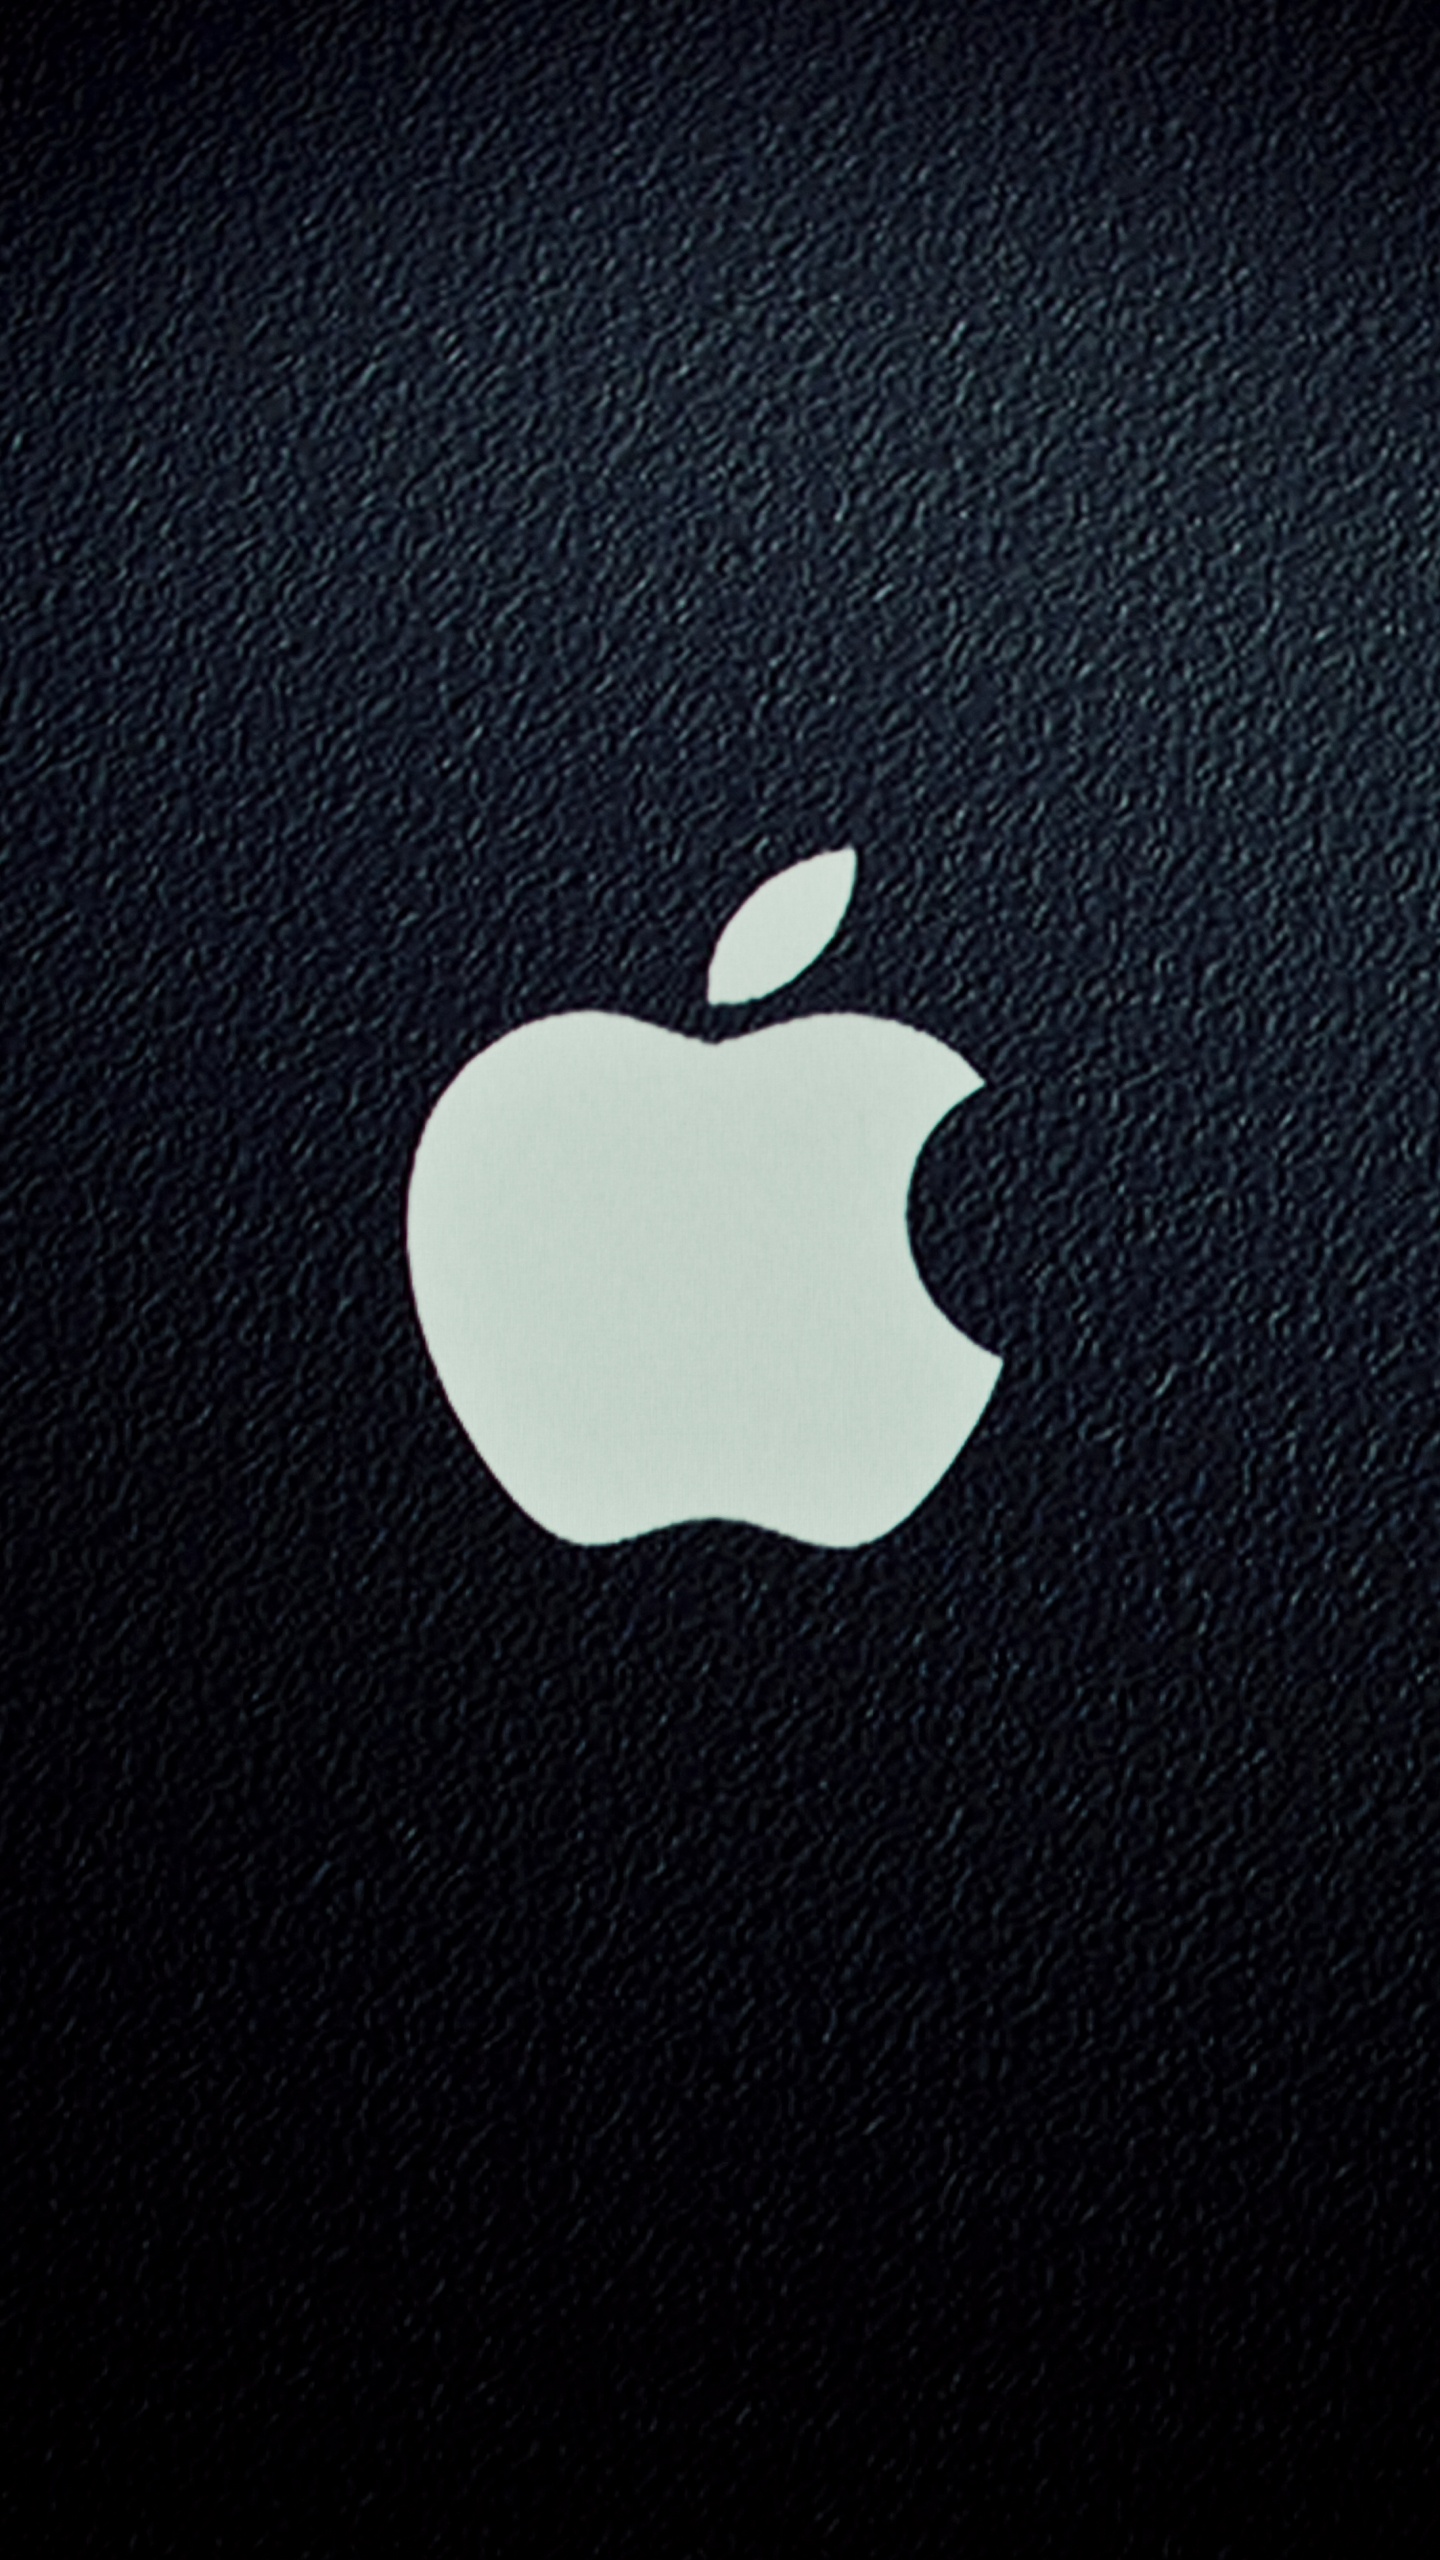 Apple, Logo, Graphics, Black, Smartphone. Wallpaper in 1440x2560 Resolution